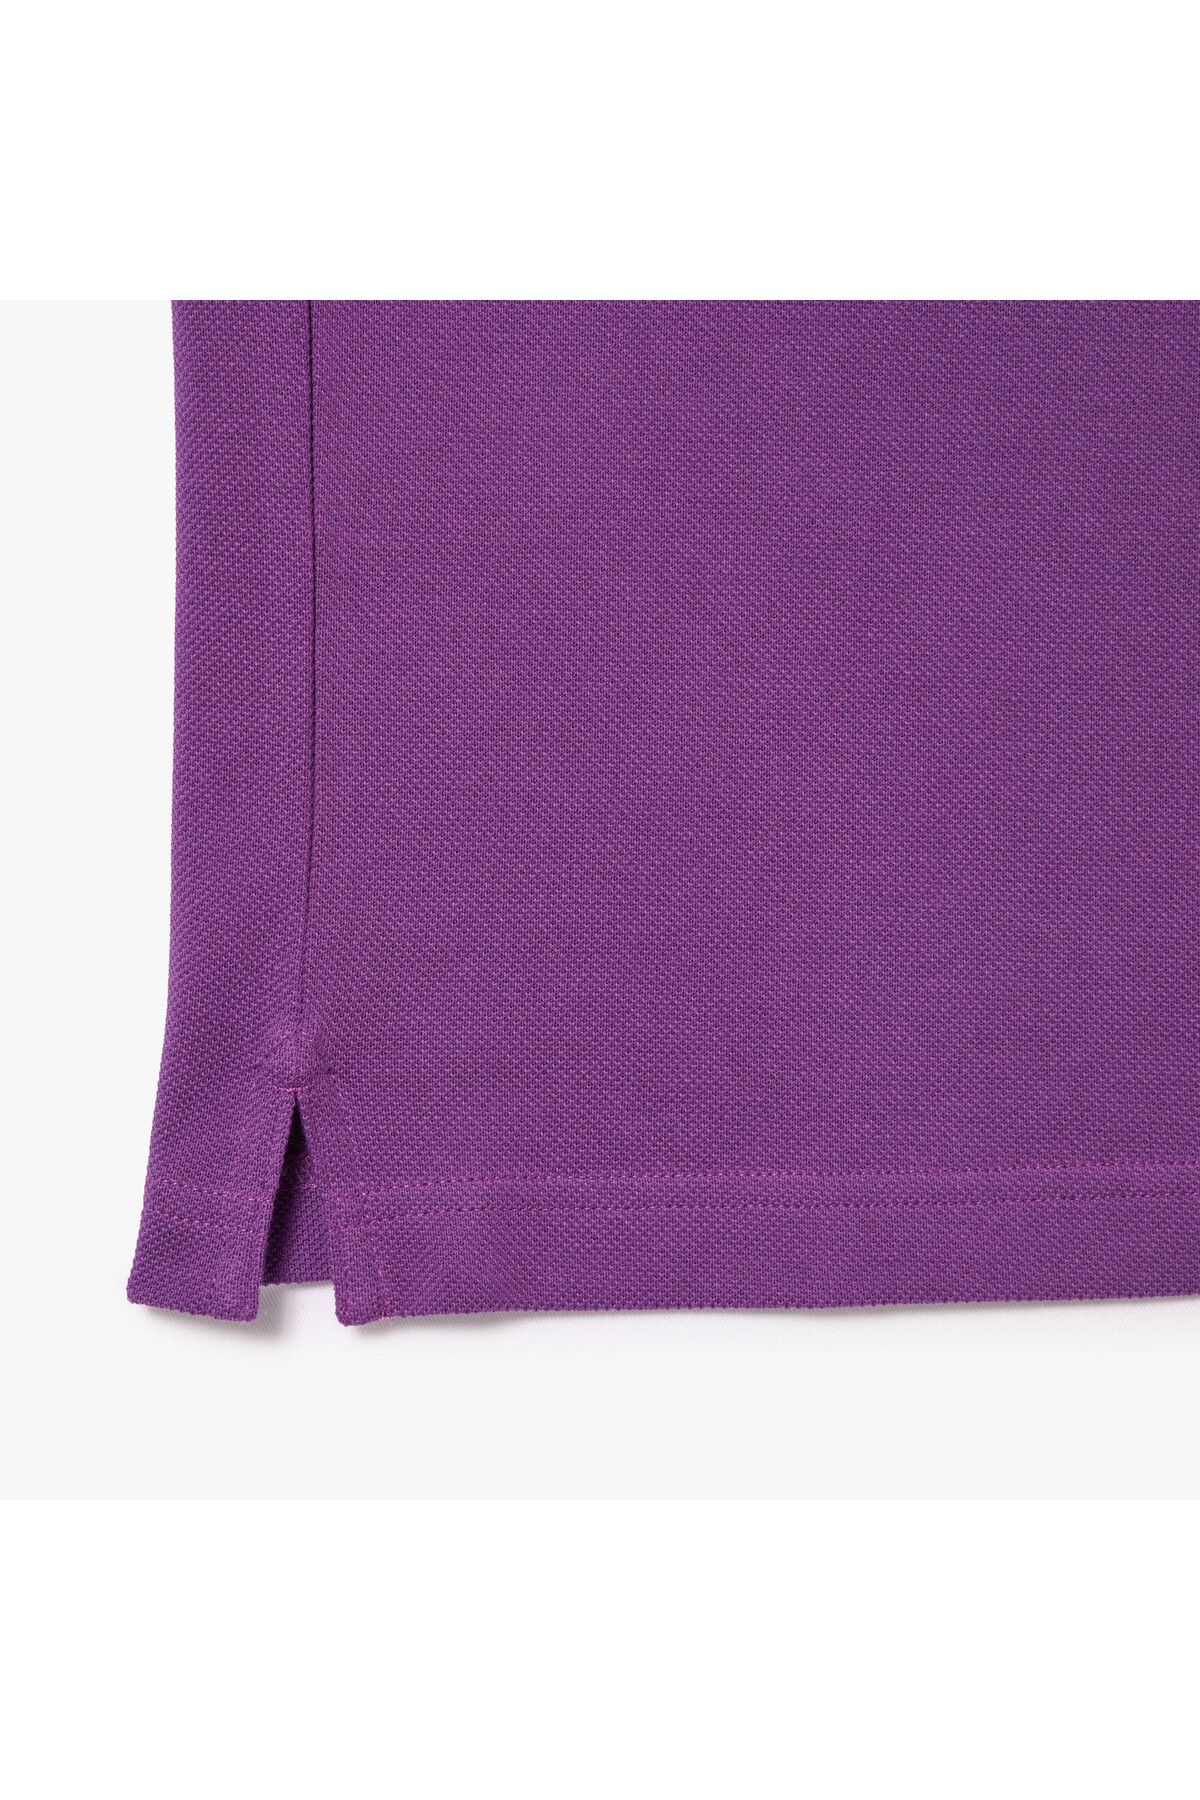 Lacoste L.12.12 Slim Fit Purple Polo